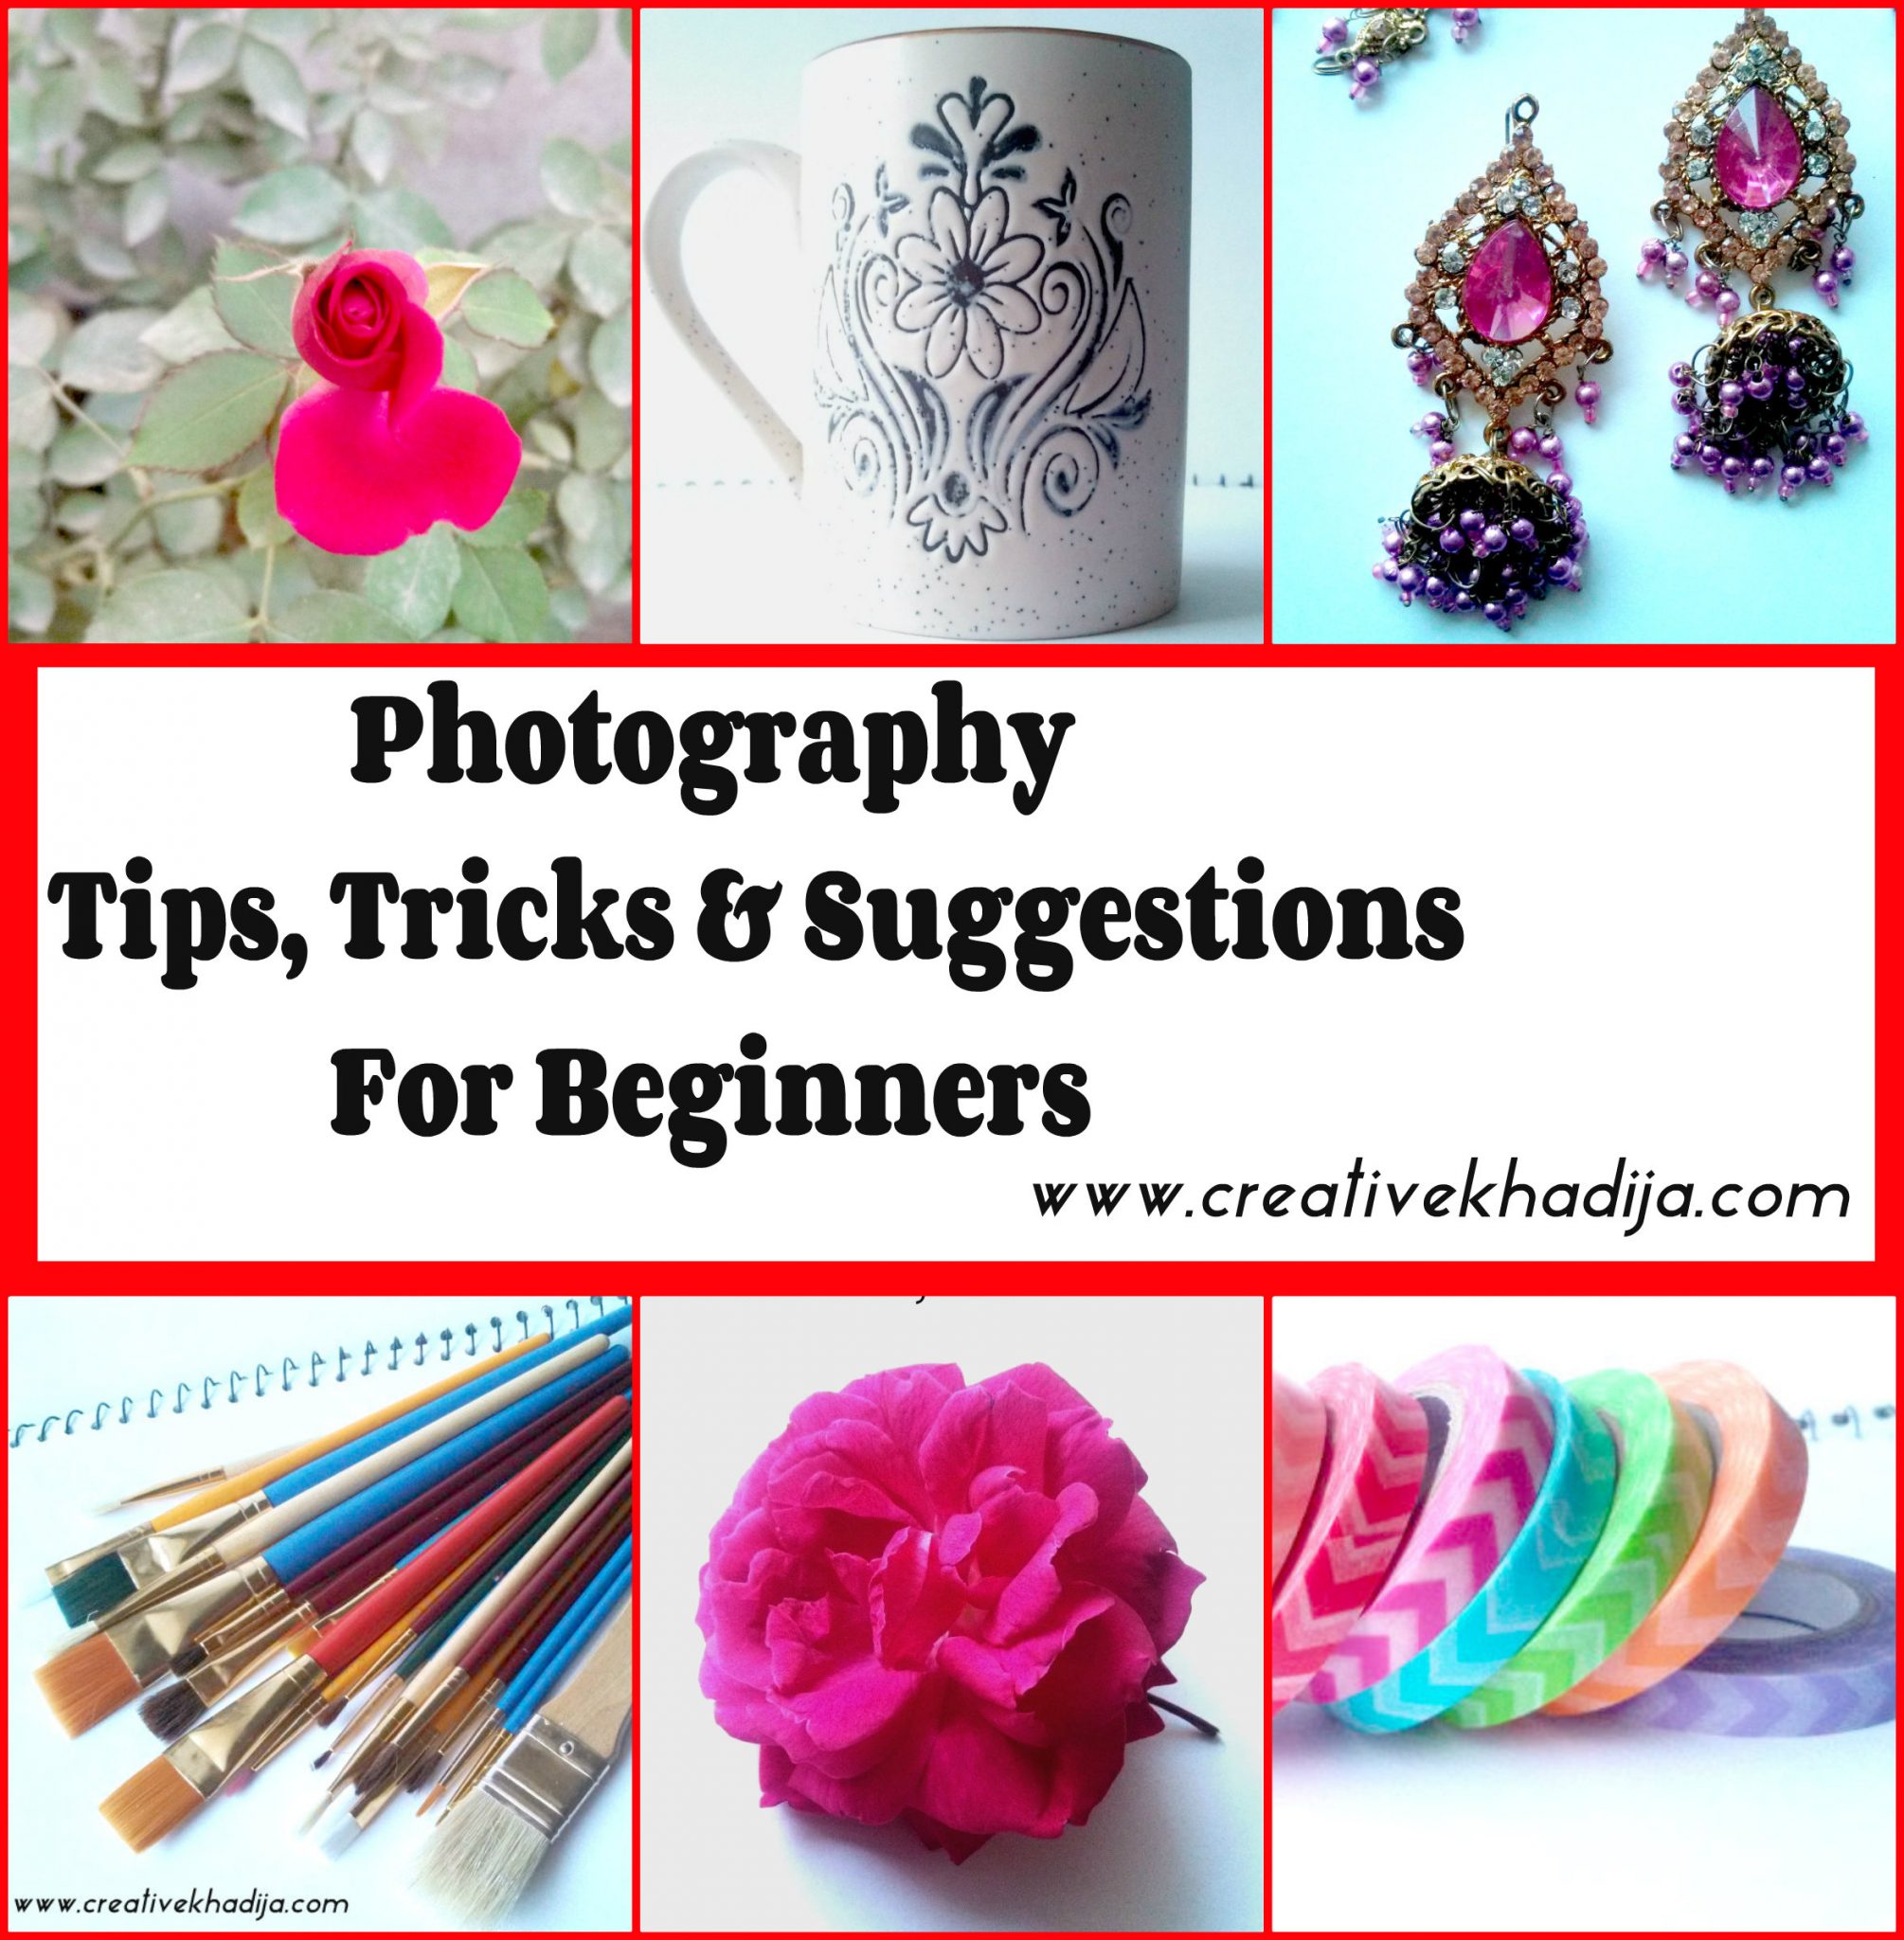 http://creativekhadija.com/wp-content/uploads/2014/12/photography-tips-for-beginners.jpg